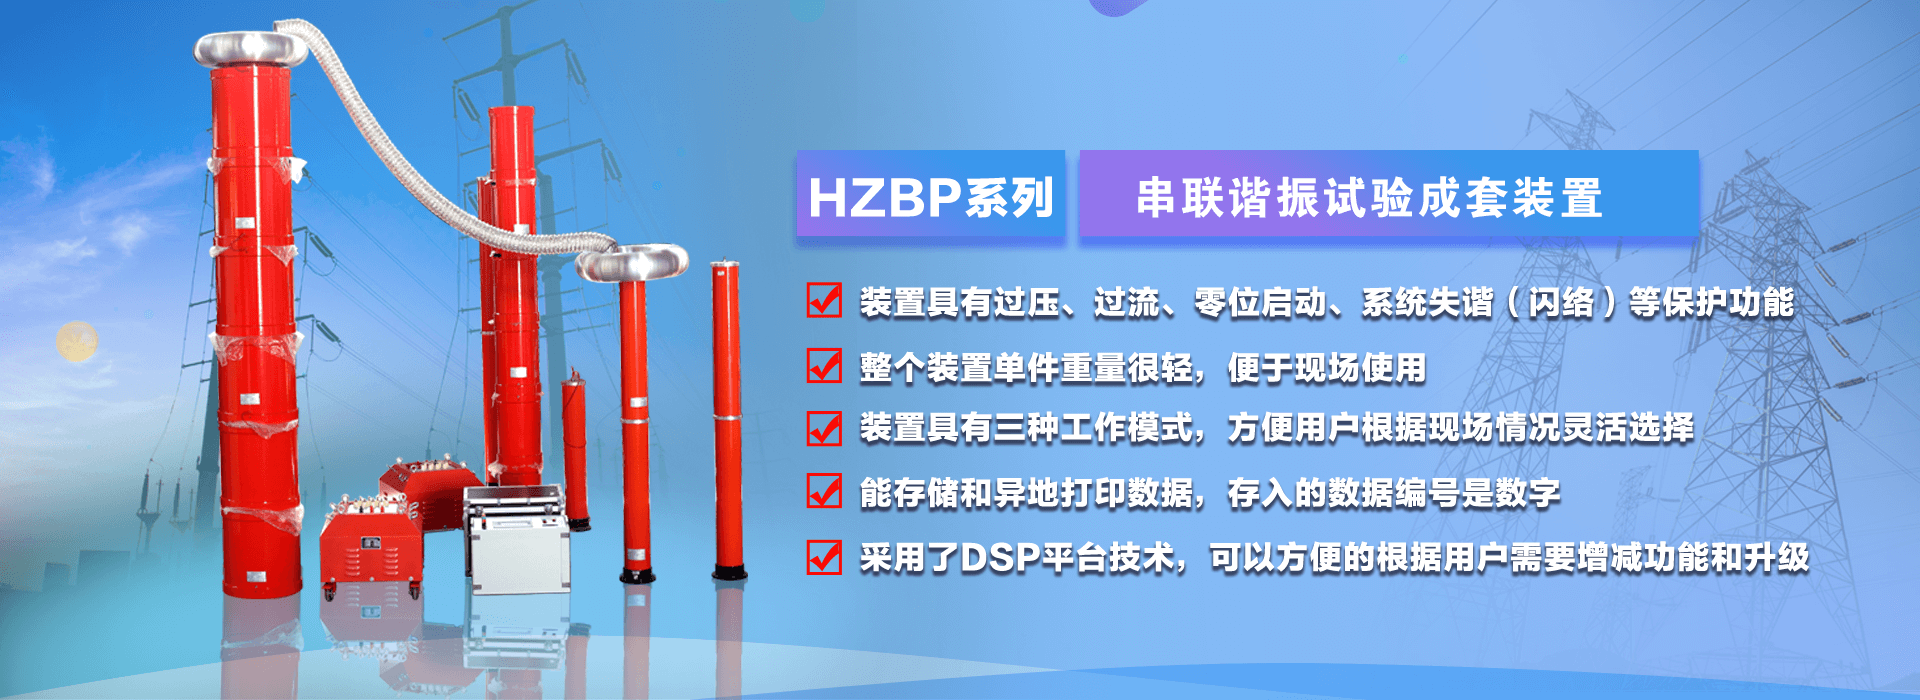 HZBP系列串联谐振试验装置